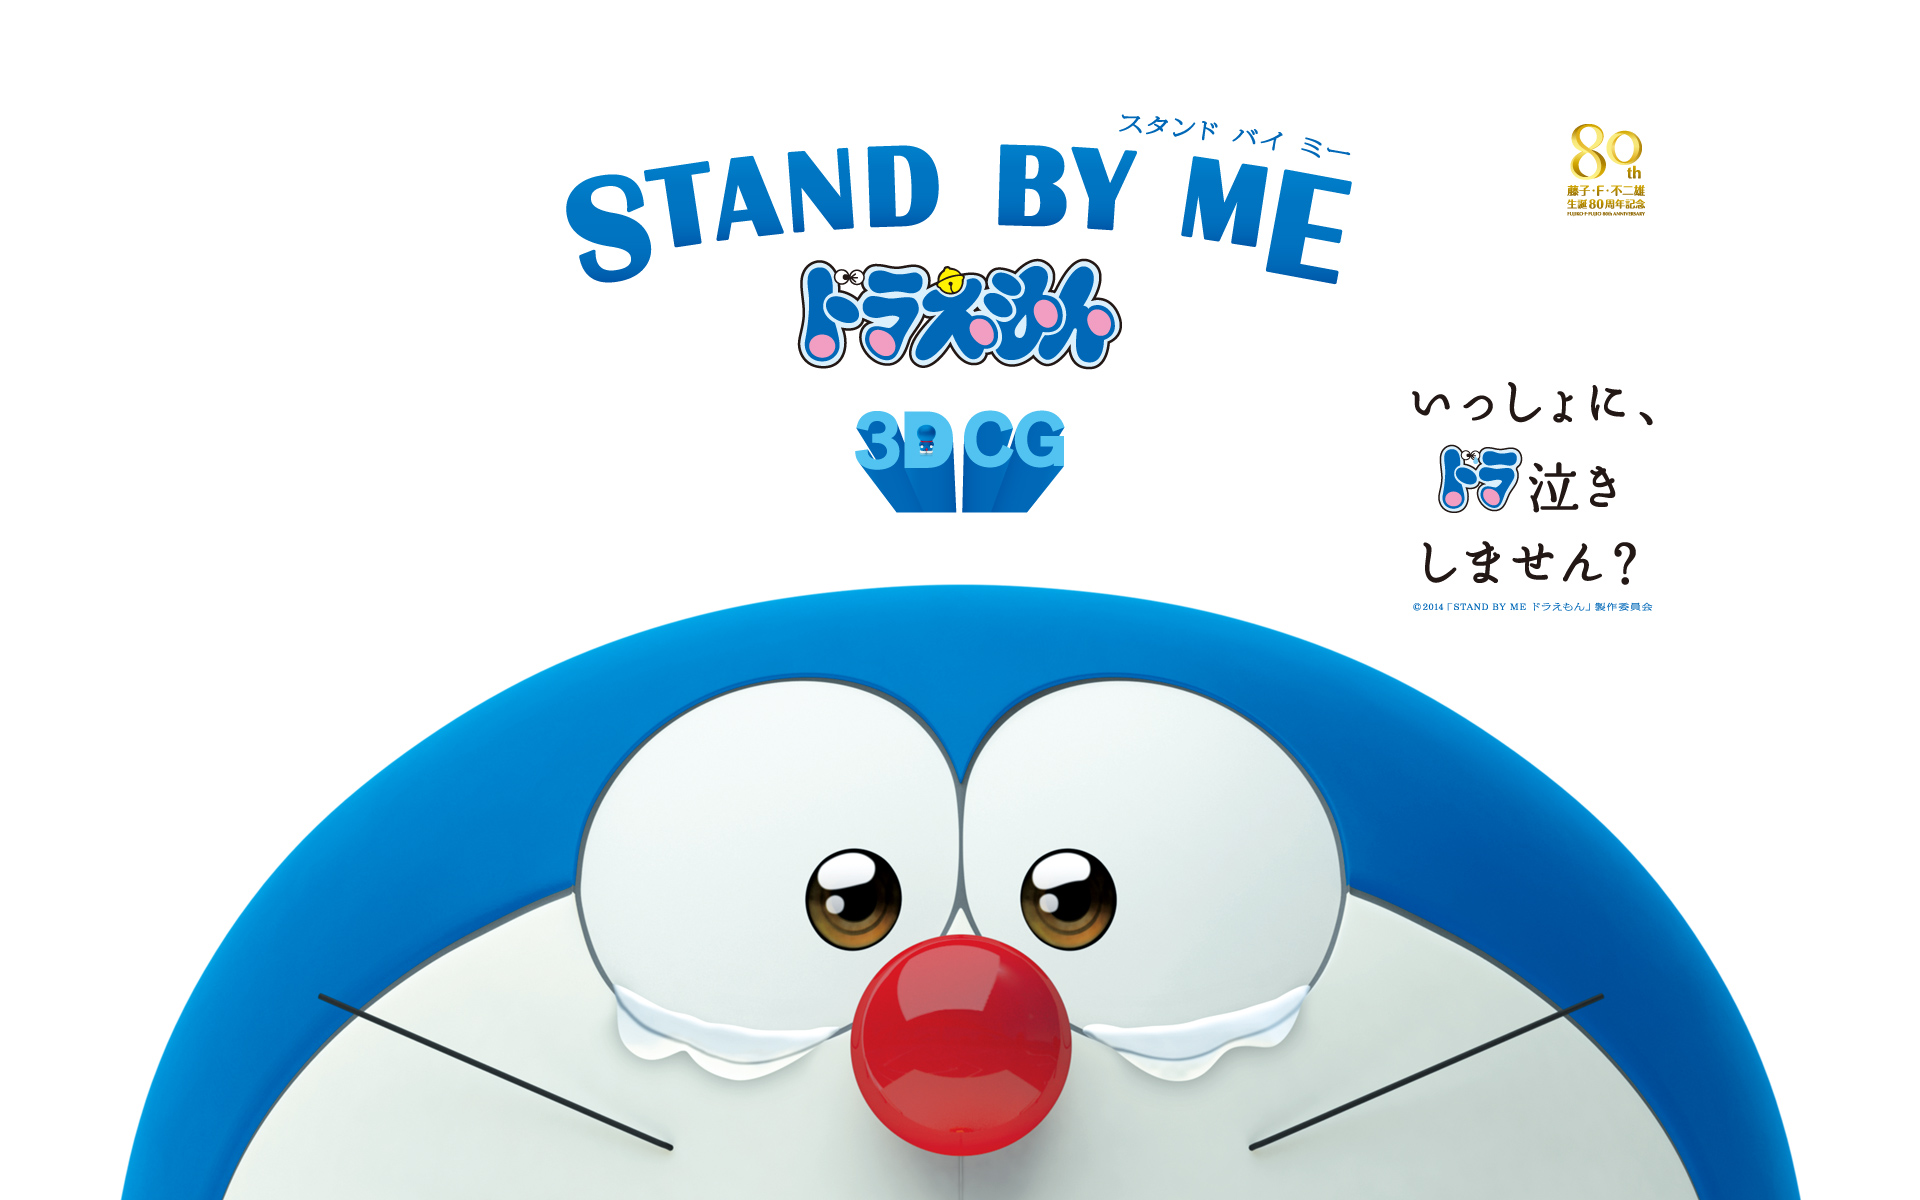 Free Download 3da Stand By Me A A 19x10 For Your Desktop Mobile Tablet Explore 95 Doraemon 3d Wallpaper 17 Doraemon 3d Wallpaper 17 3d Doraemon Wallpaper Doraemon 3d Wallpaper 16